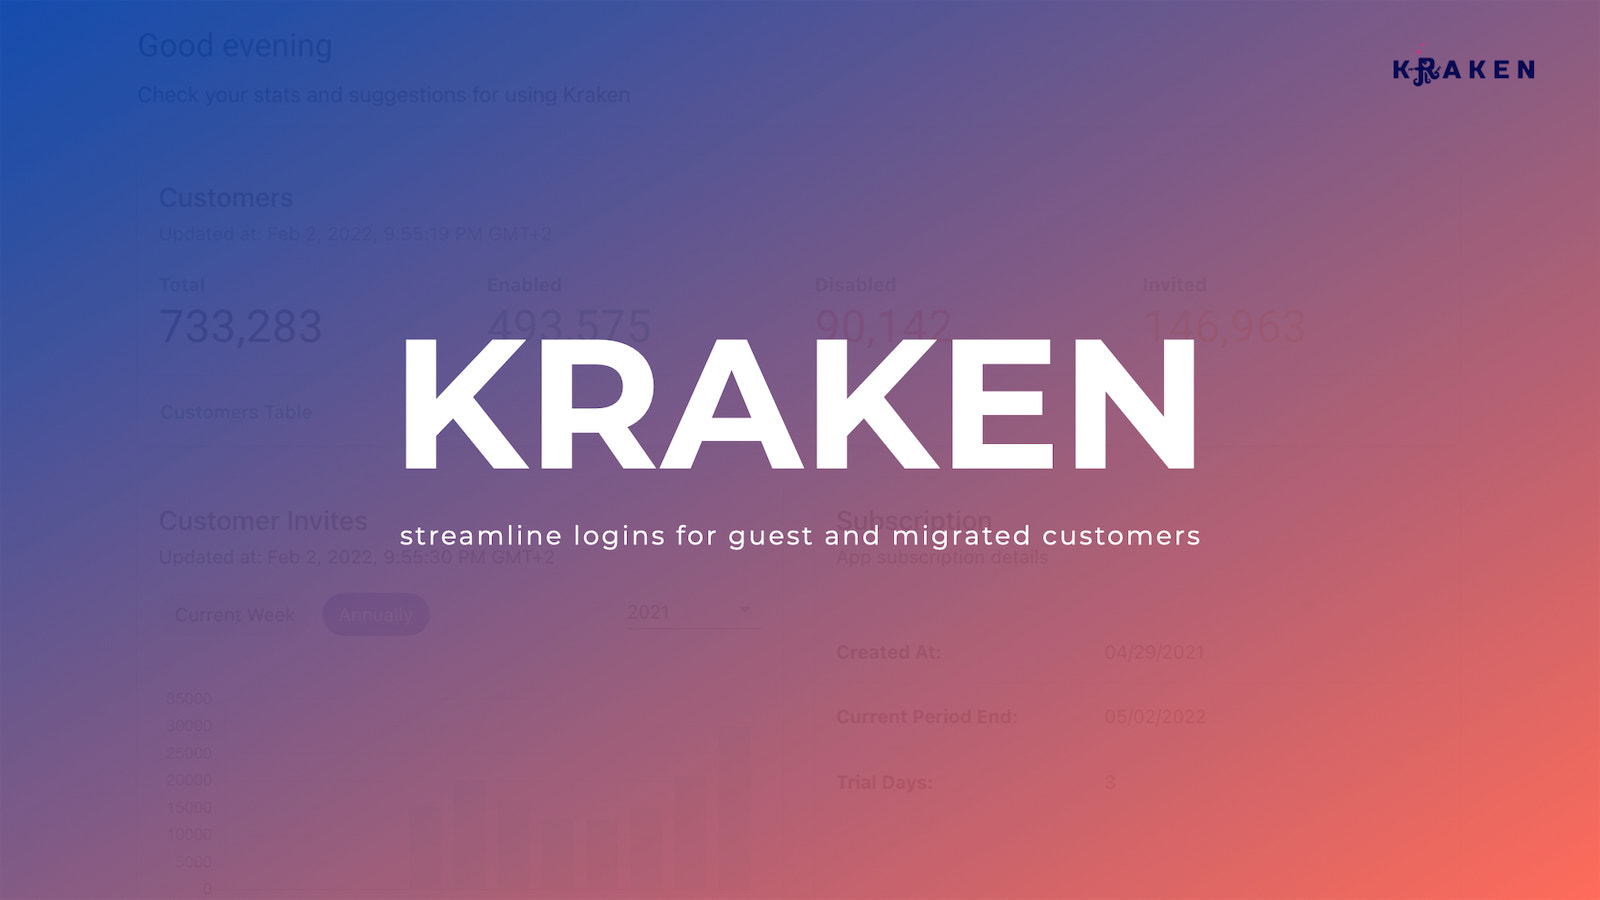 Streamline logins for guest and migrated customers - Kraken App